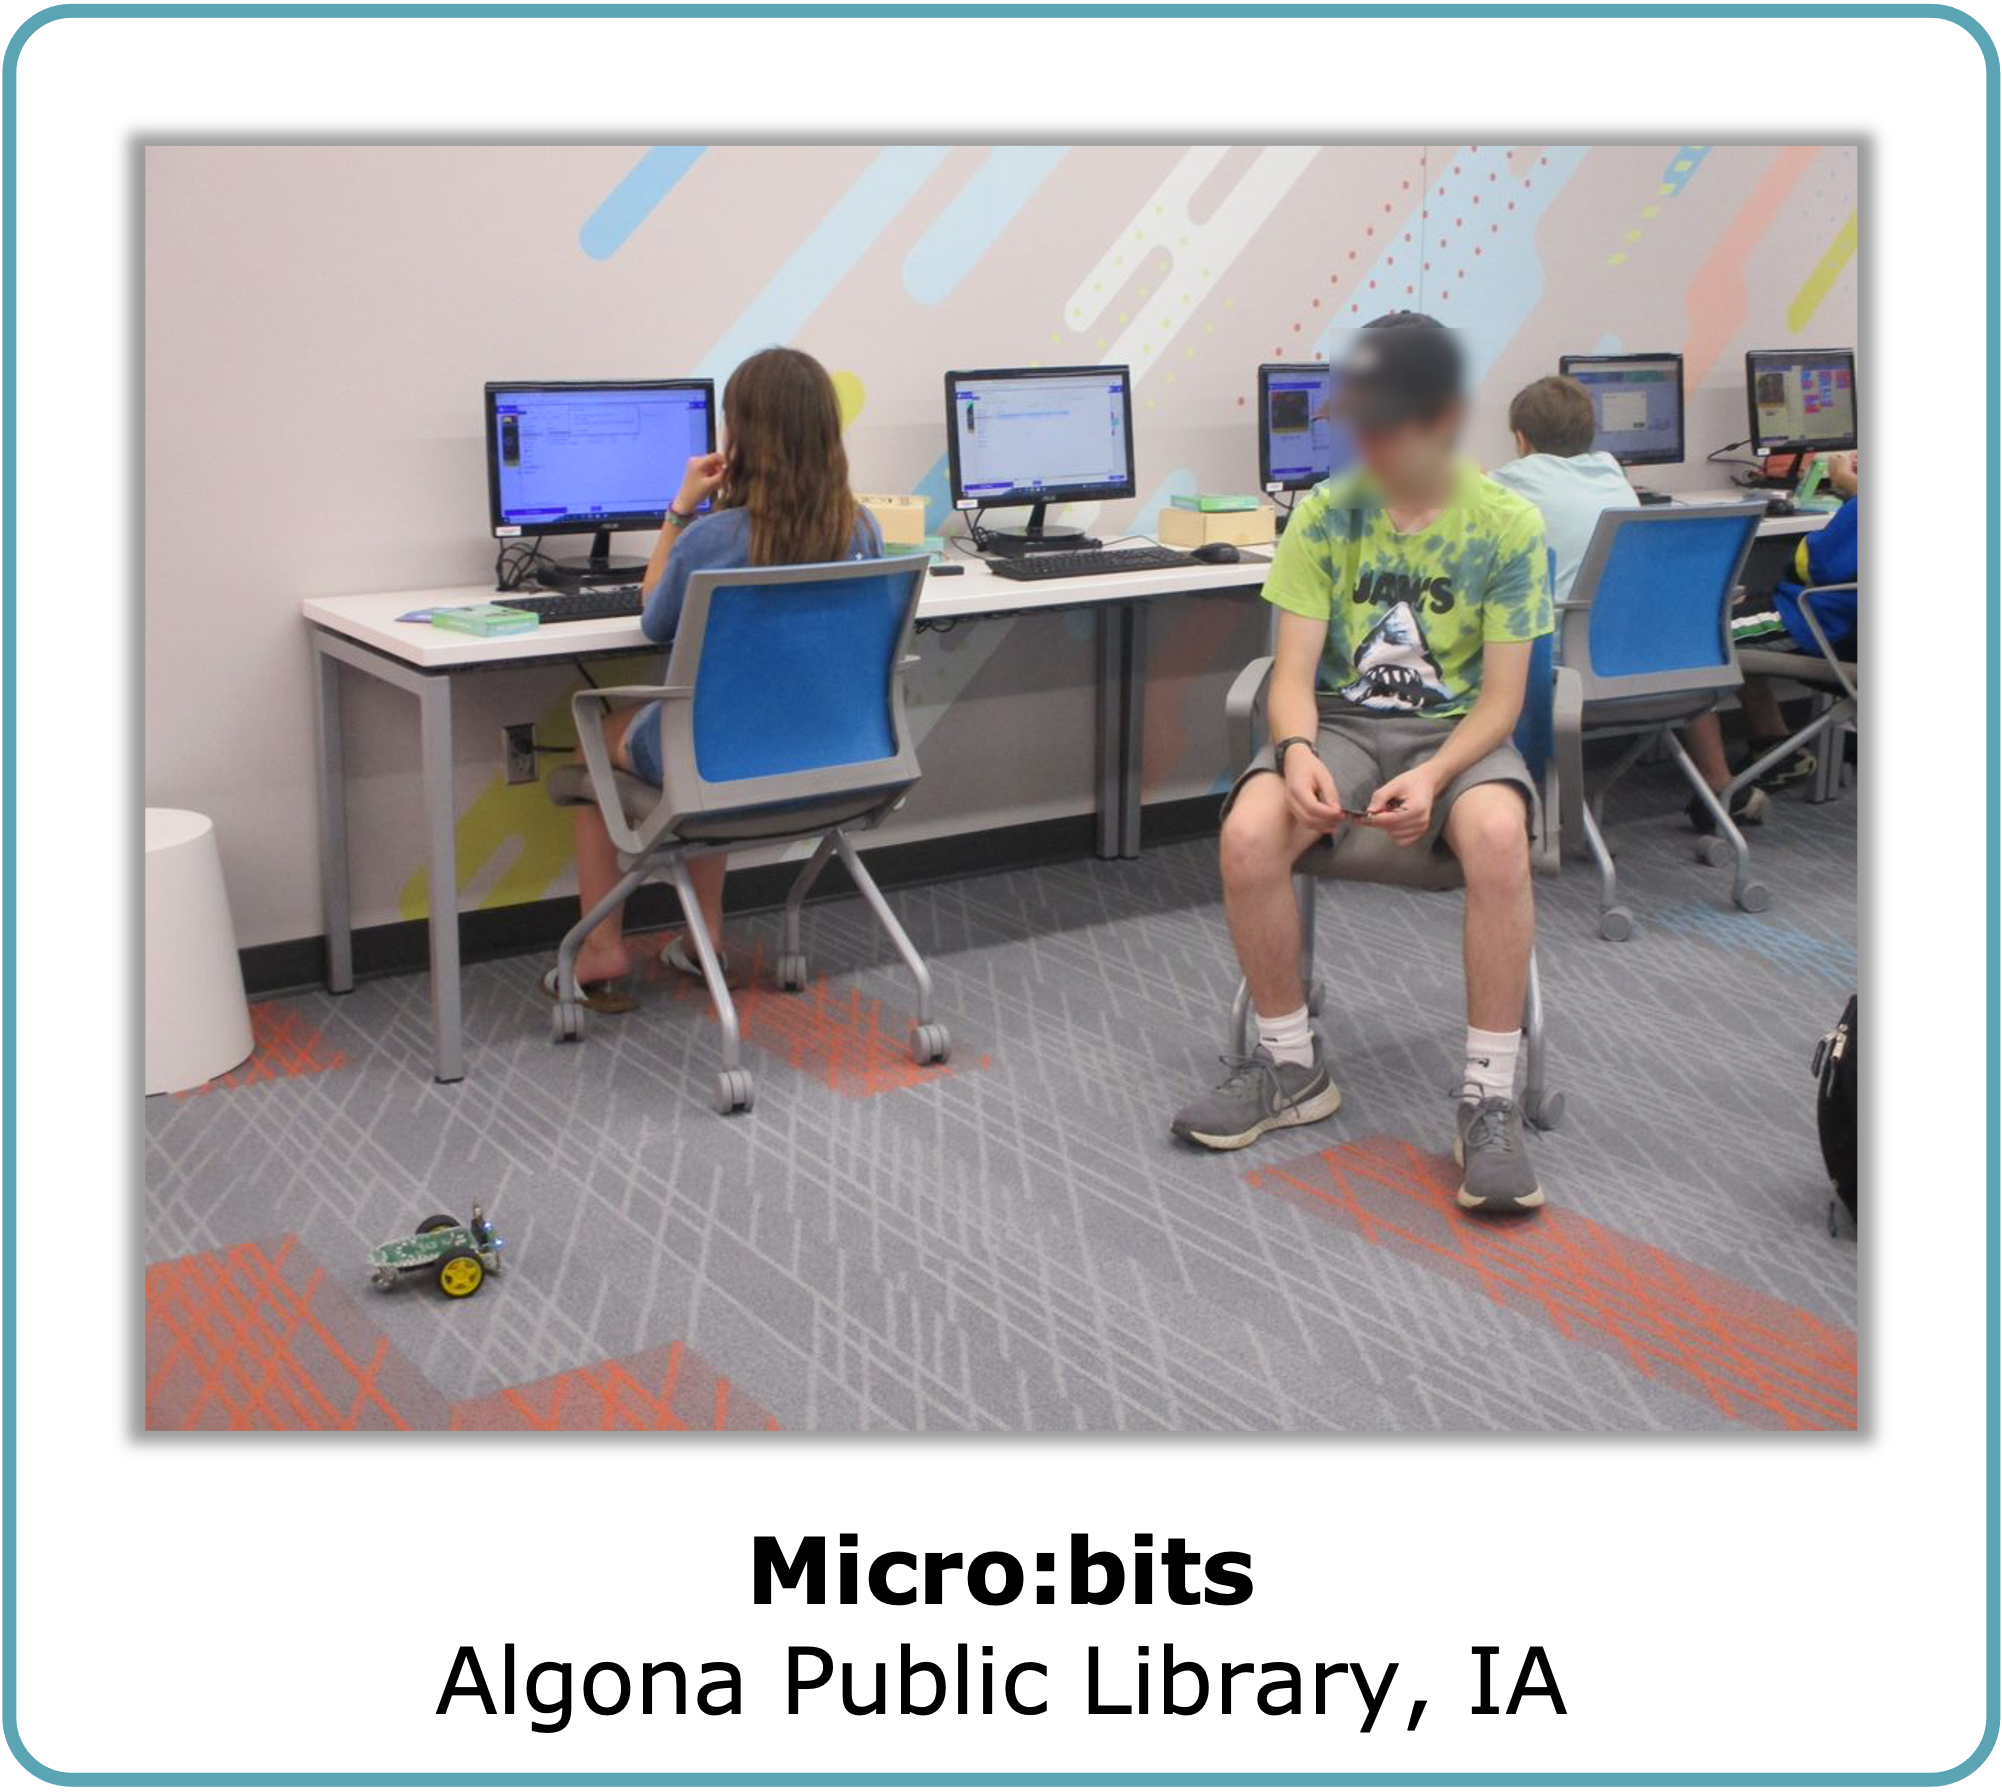 Click to open the case study of the micro bits program at Algona Public Library in Iowa.